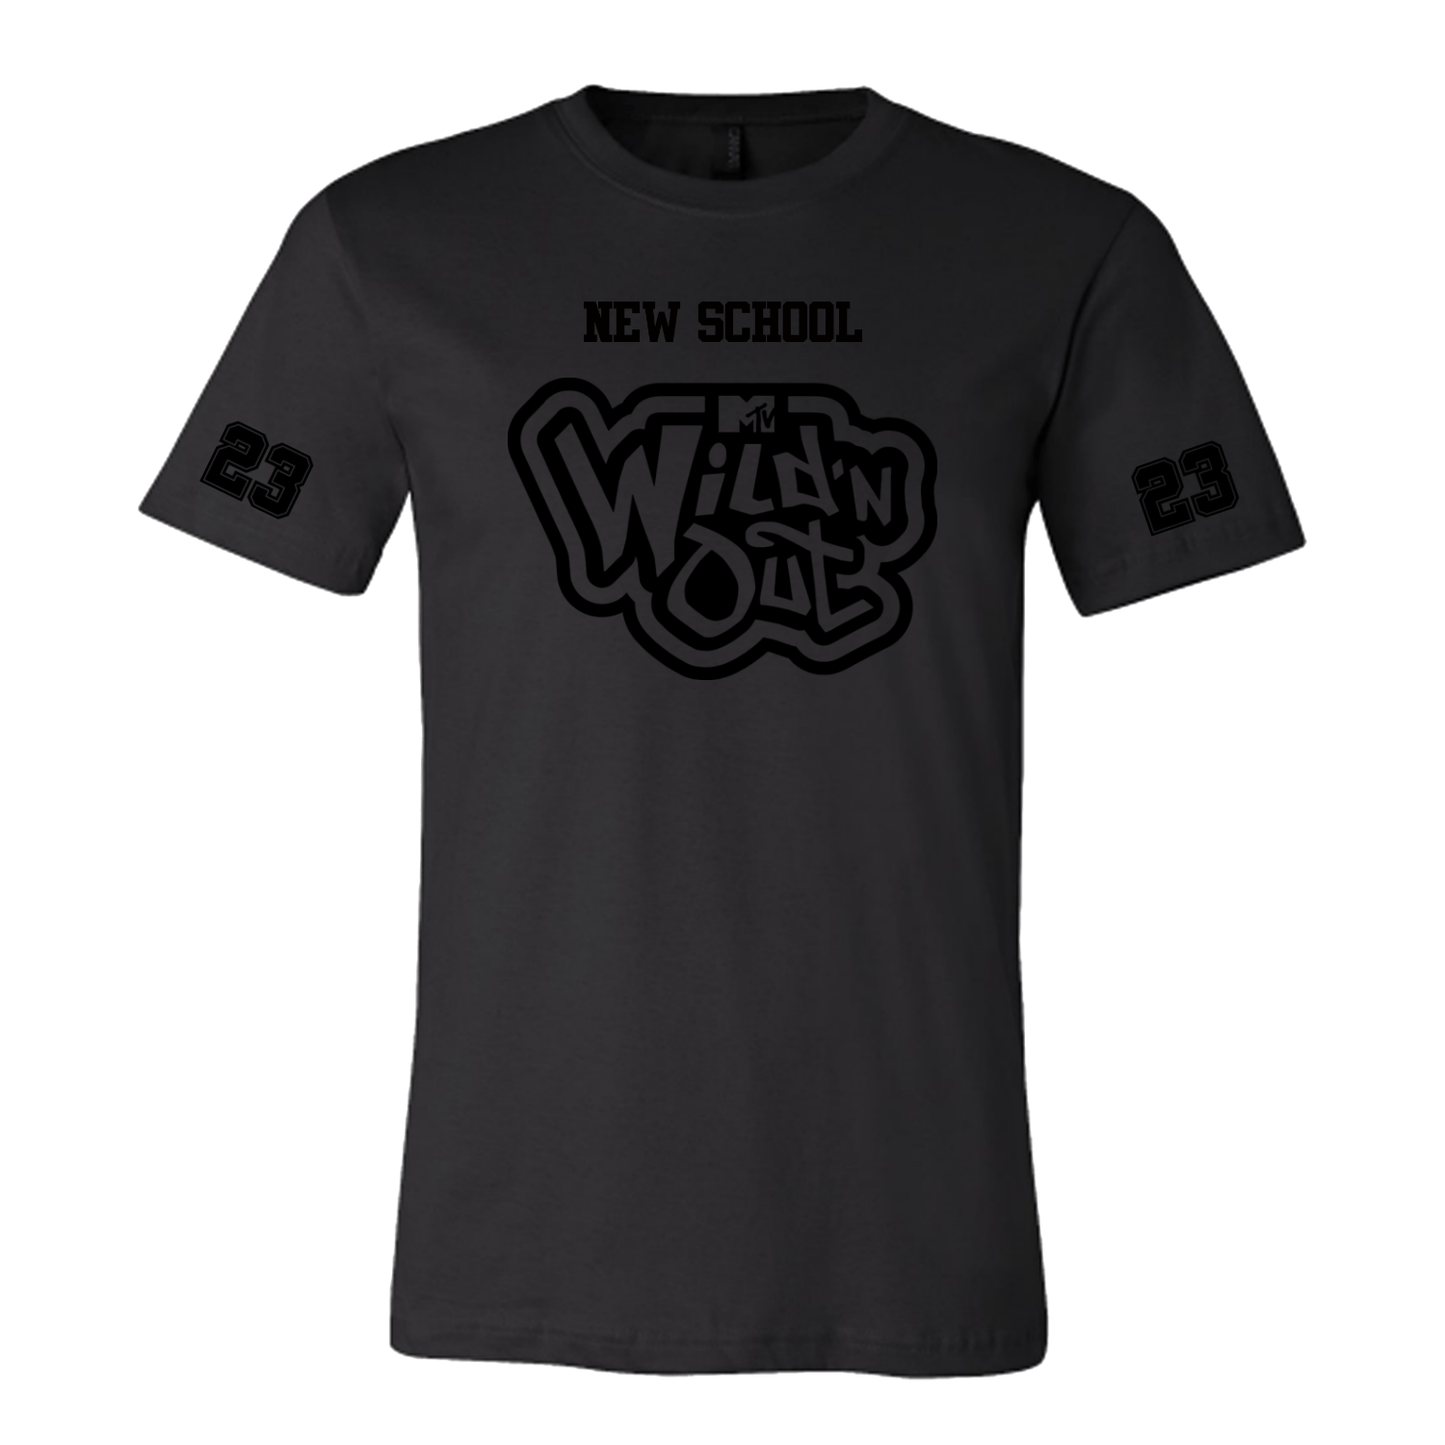 Wild 'N Out Black on Black New School Short Sleeve T - Shirt - Paramount Shop